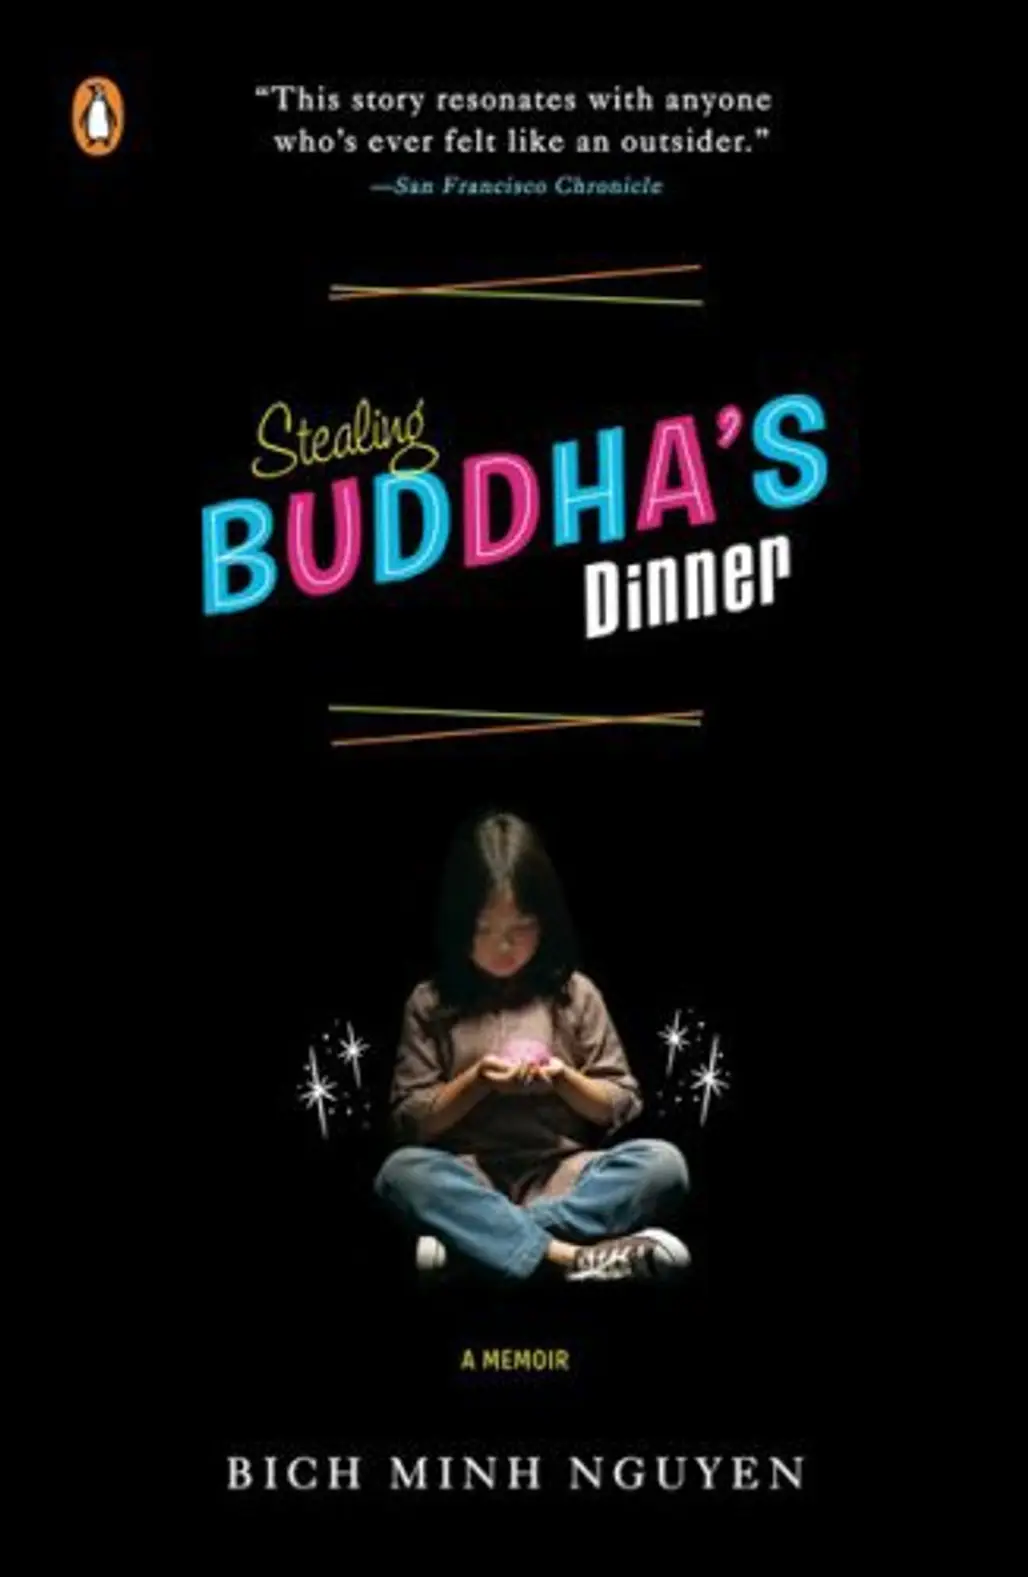 Stealing Buddha’s Dinner by Bich Minh Nguyen